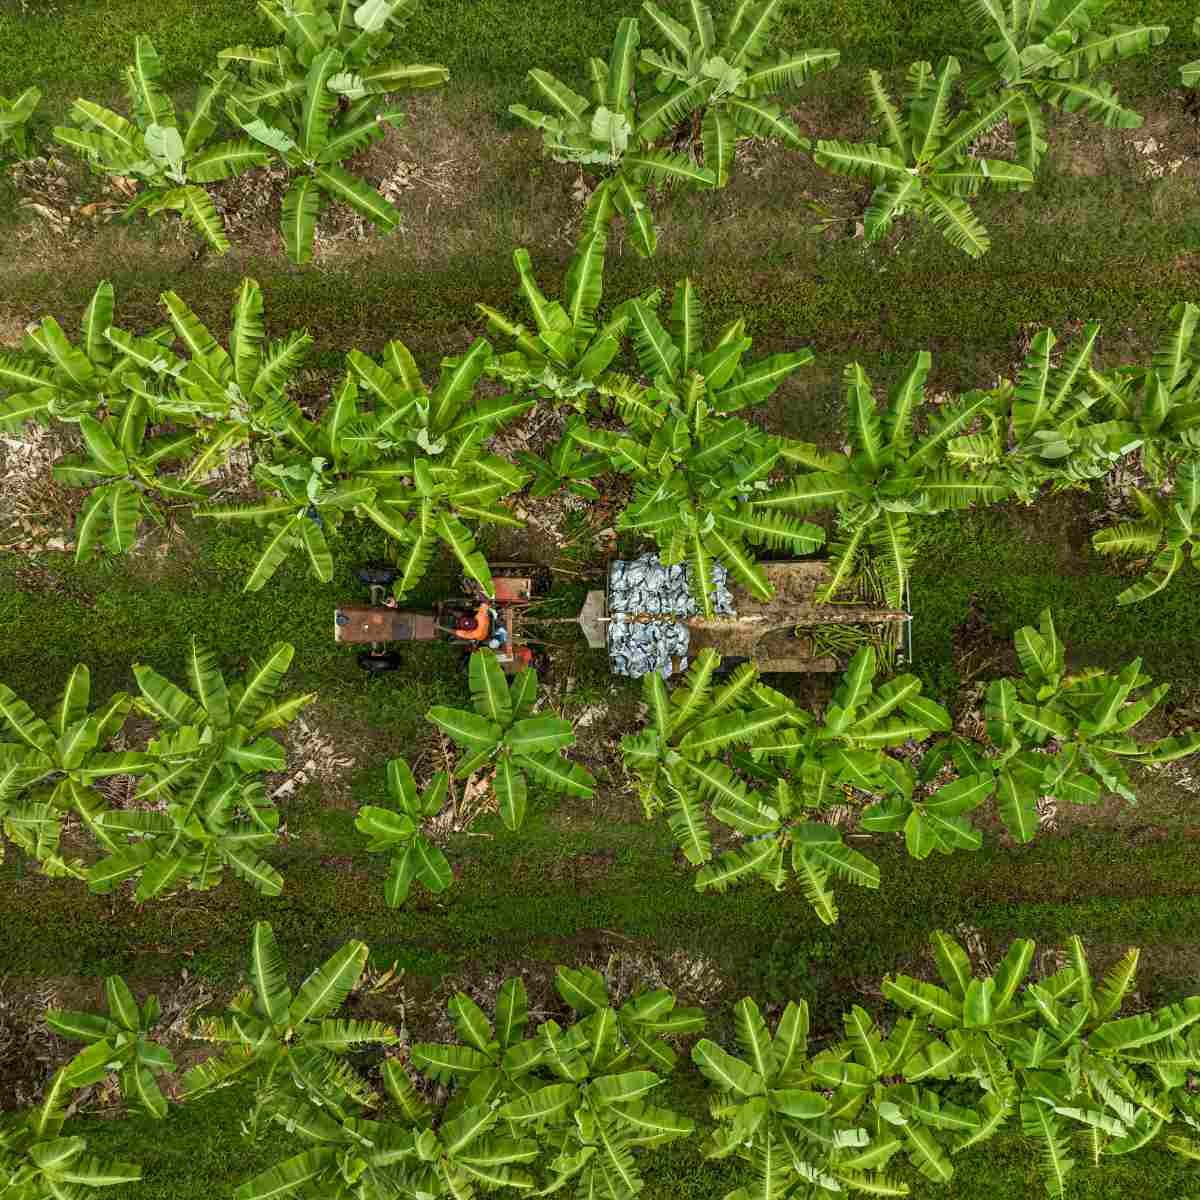 A drone shot of a banana plantation with banana trees.